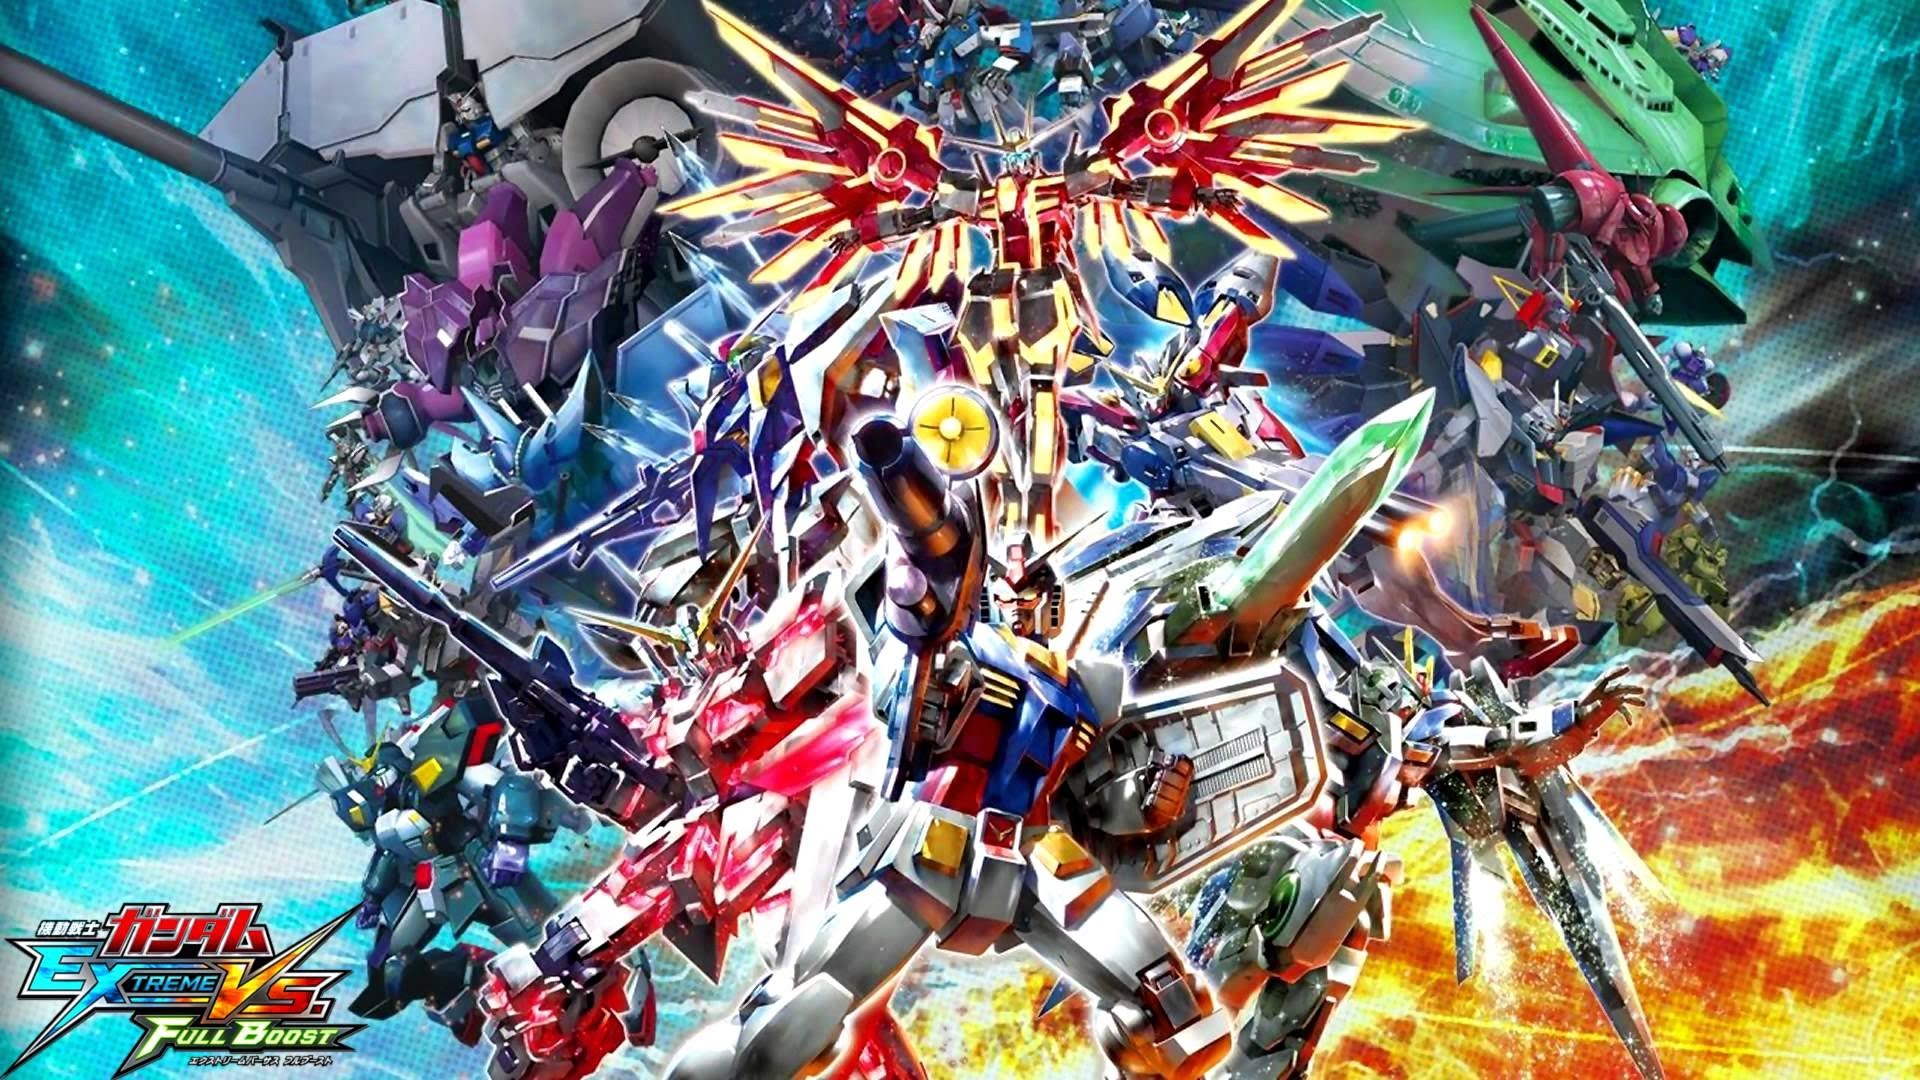 1920x1080, Mobile Suit Gundam - Gundam Extreme Vs Full Boost - HD Wallpaper 